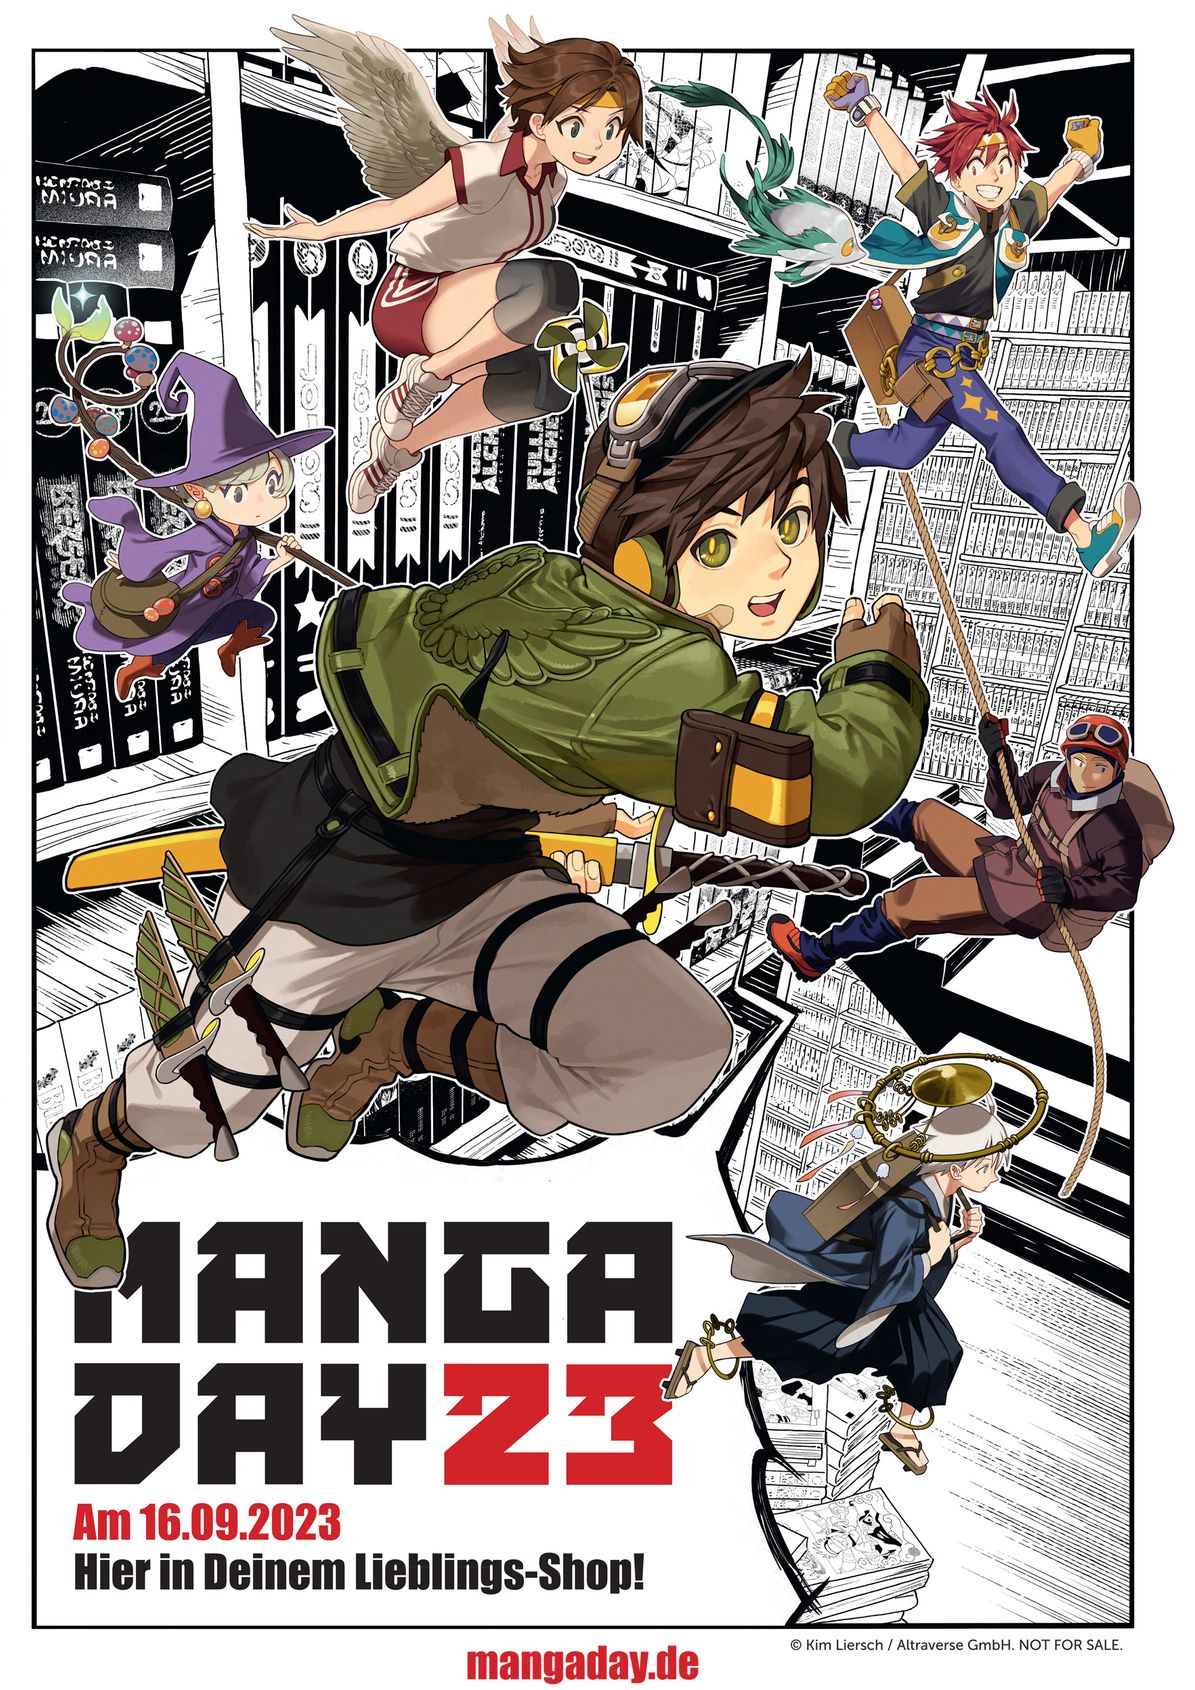 Foto: Alle Infos zum Manga Day 2023.